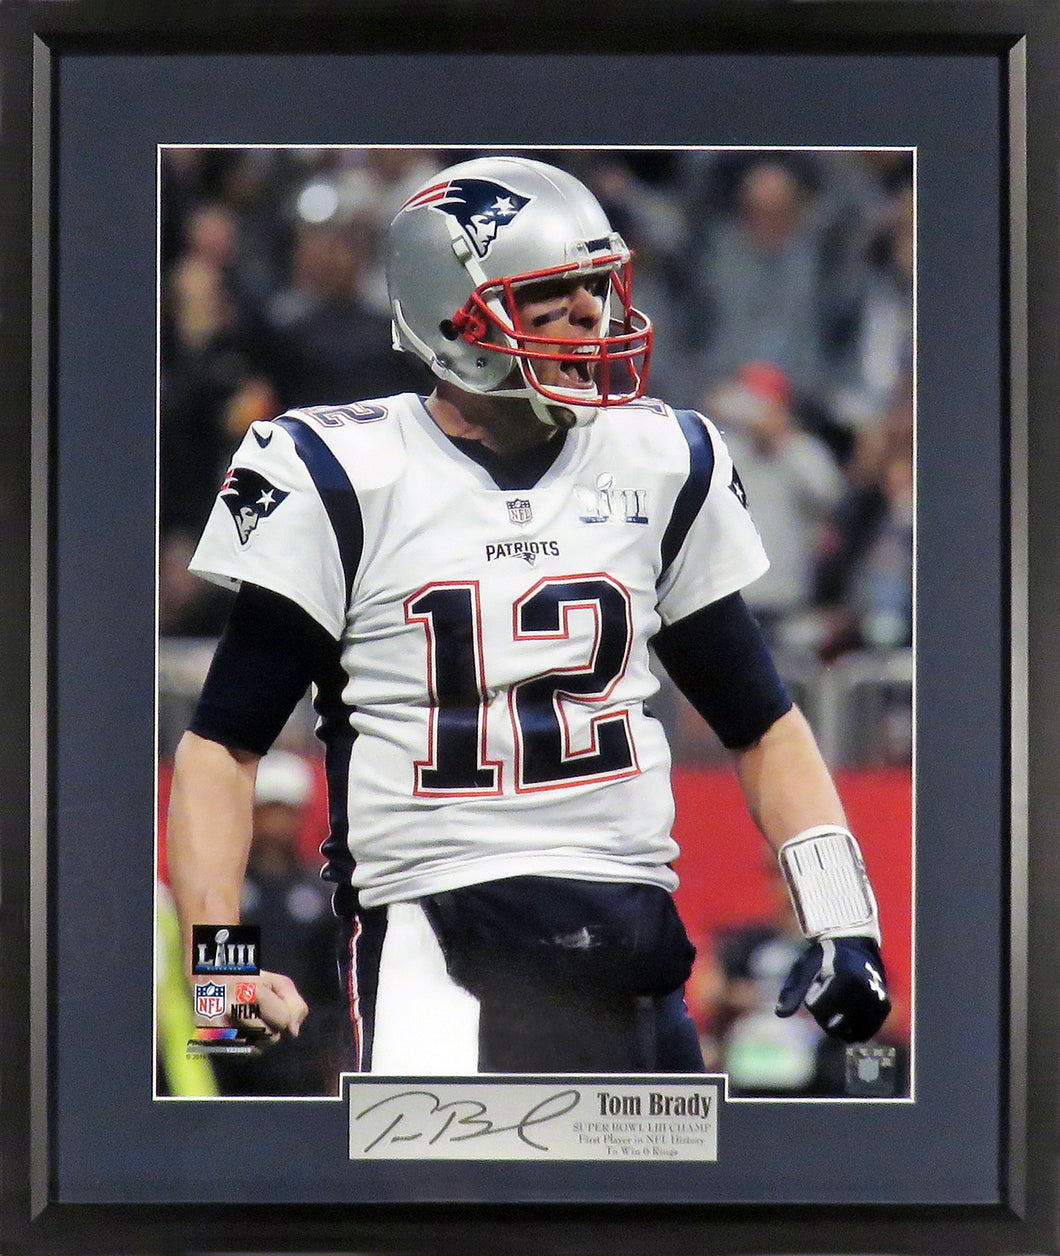 Tom Brady “Super Bowl LIII Celebration” Framed Photograph Engraved Series